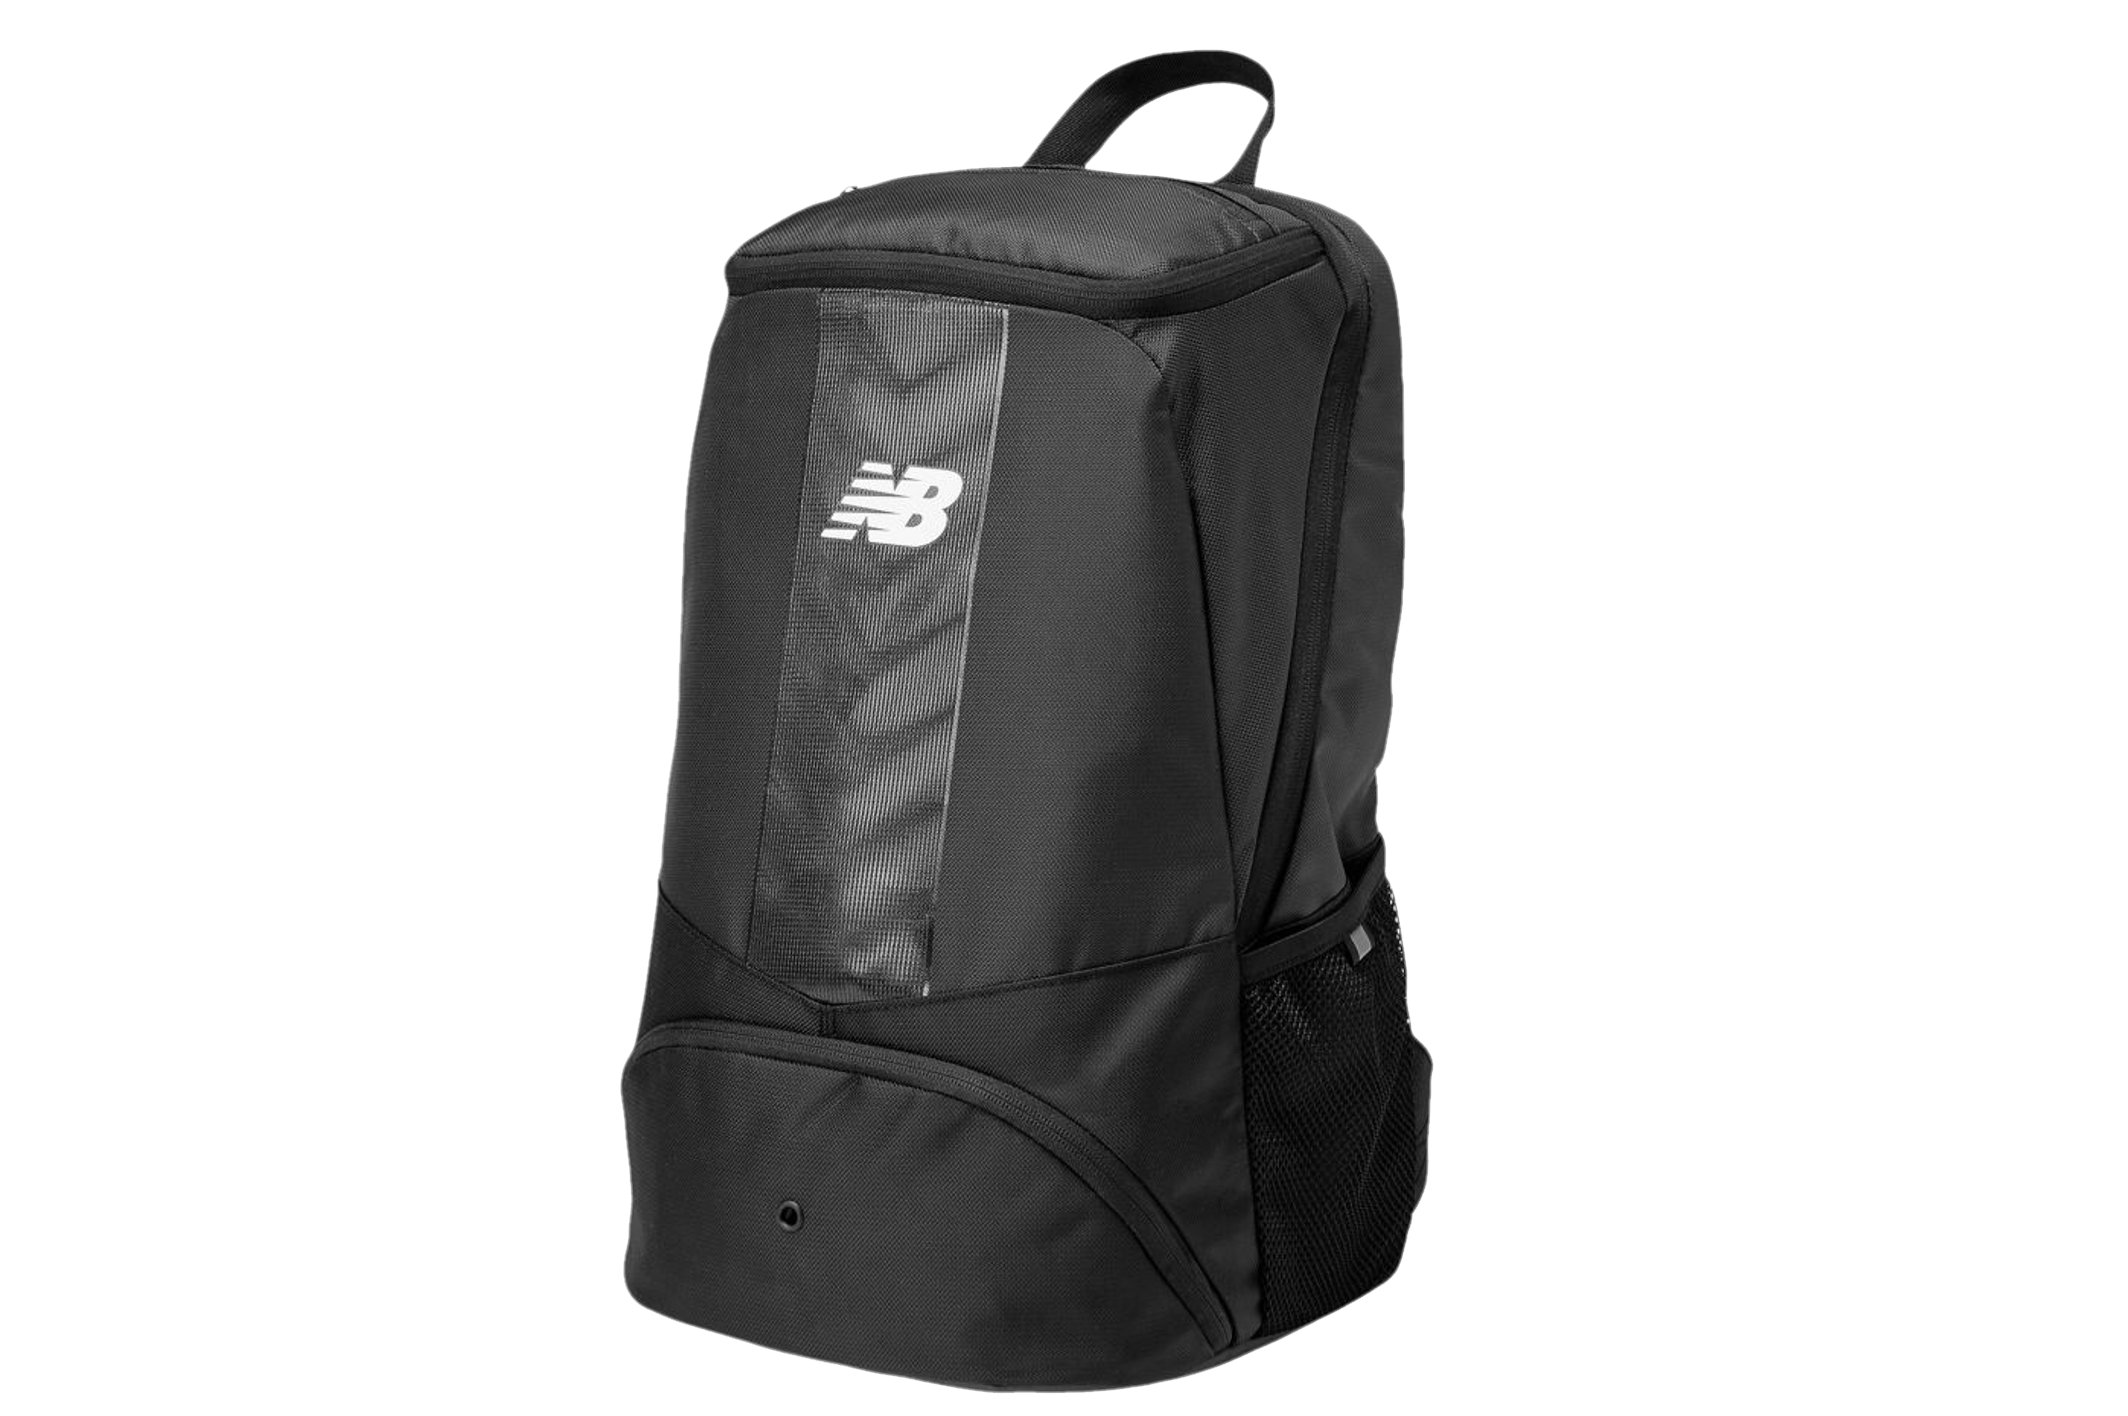 new balance team ball backpack